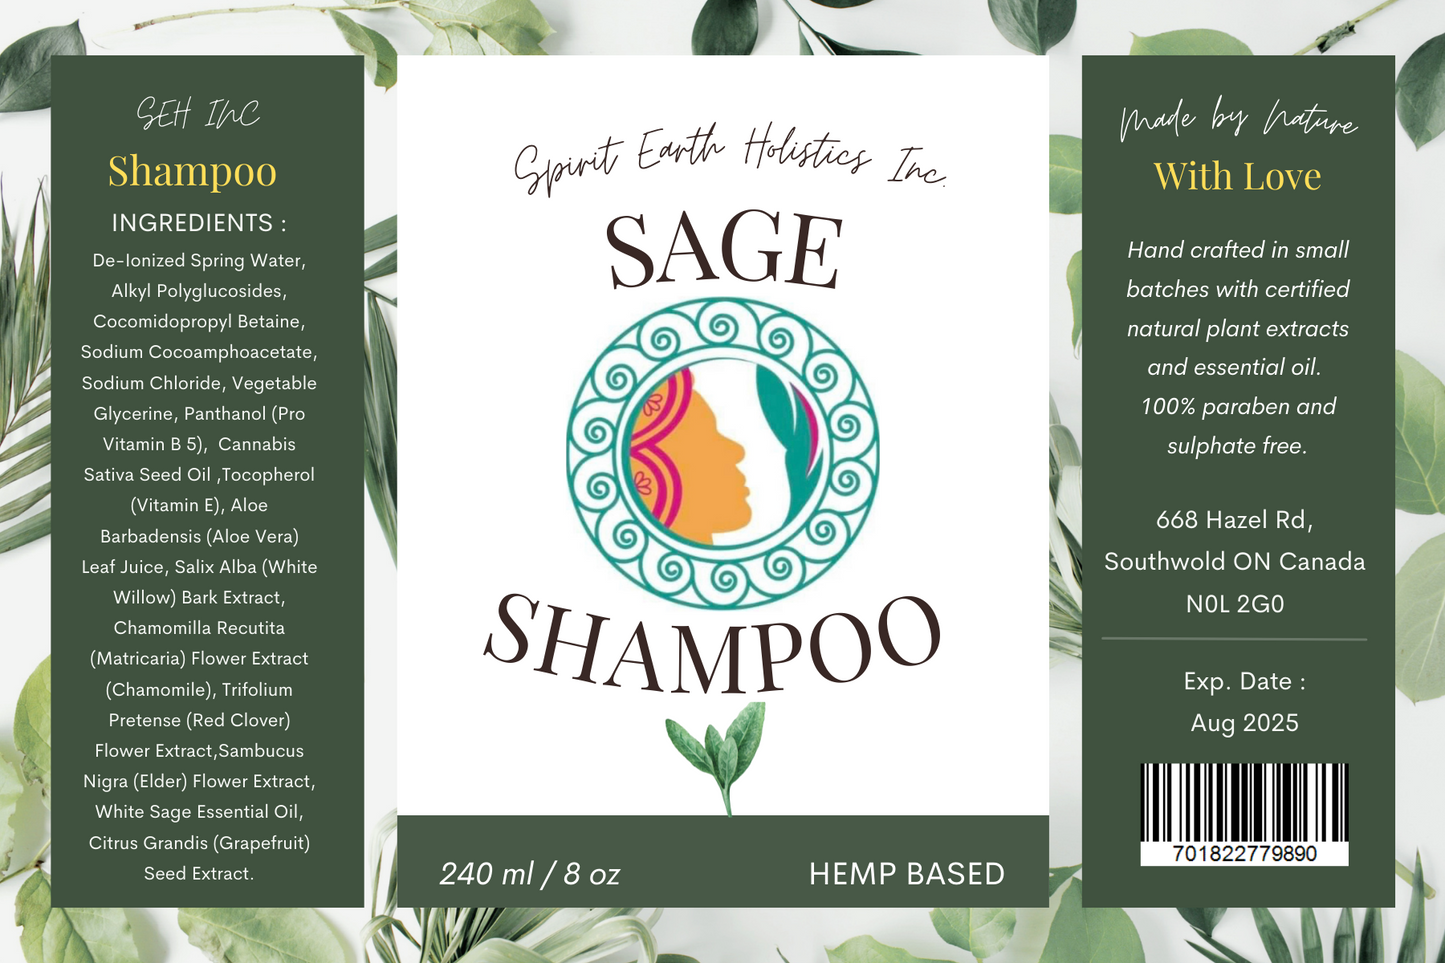 Sage Shampoo